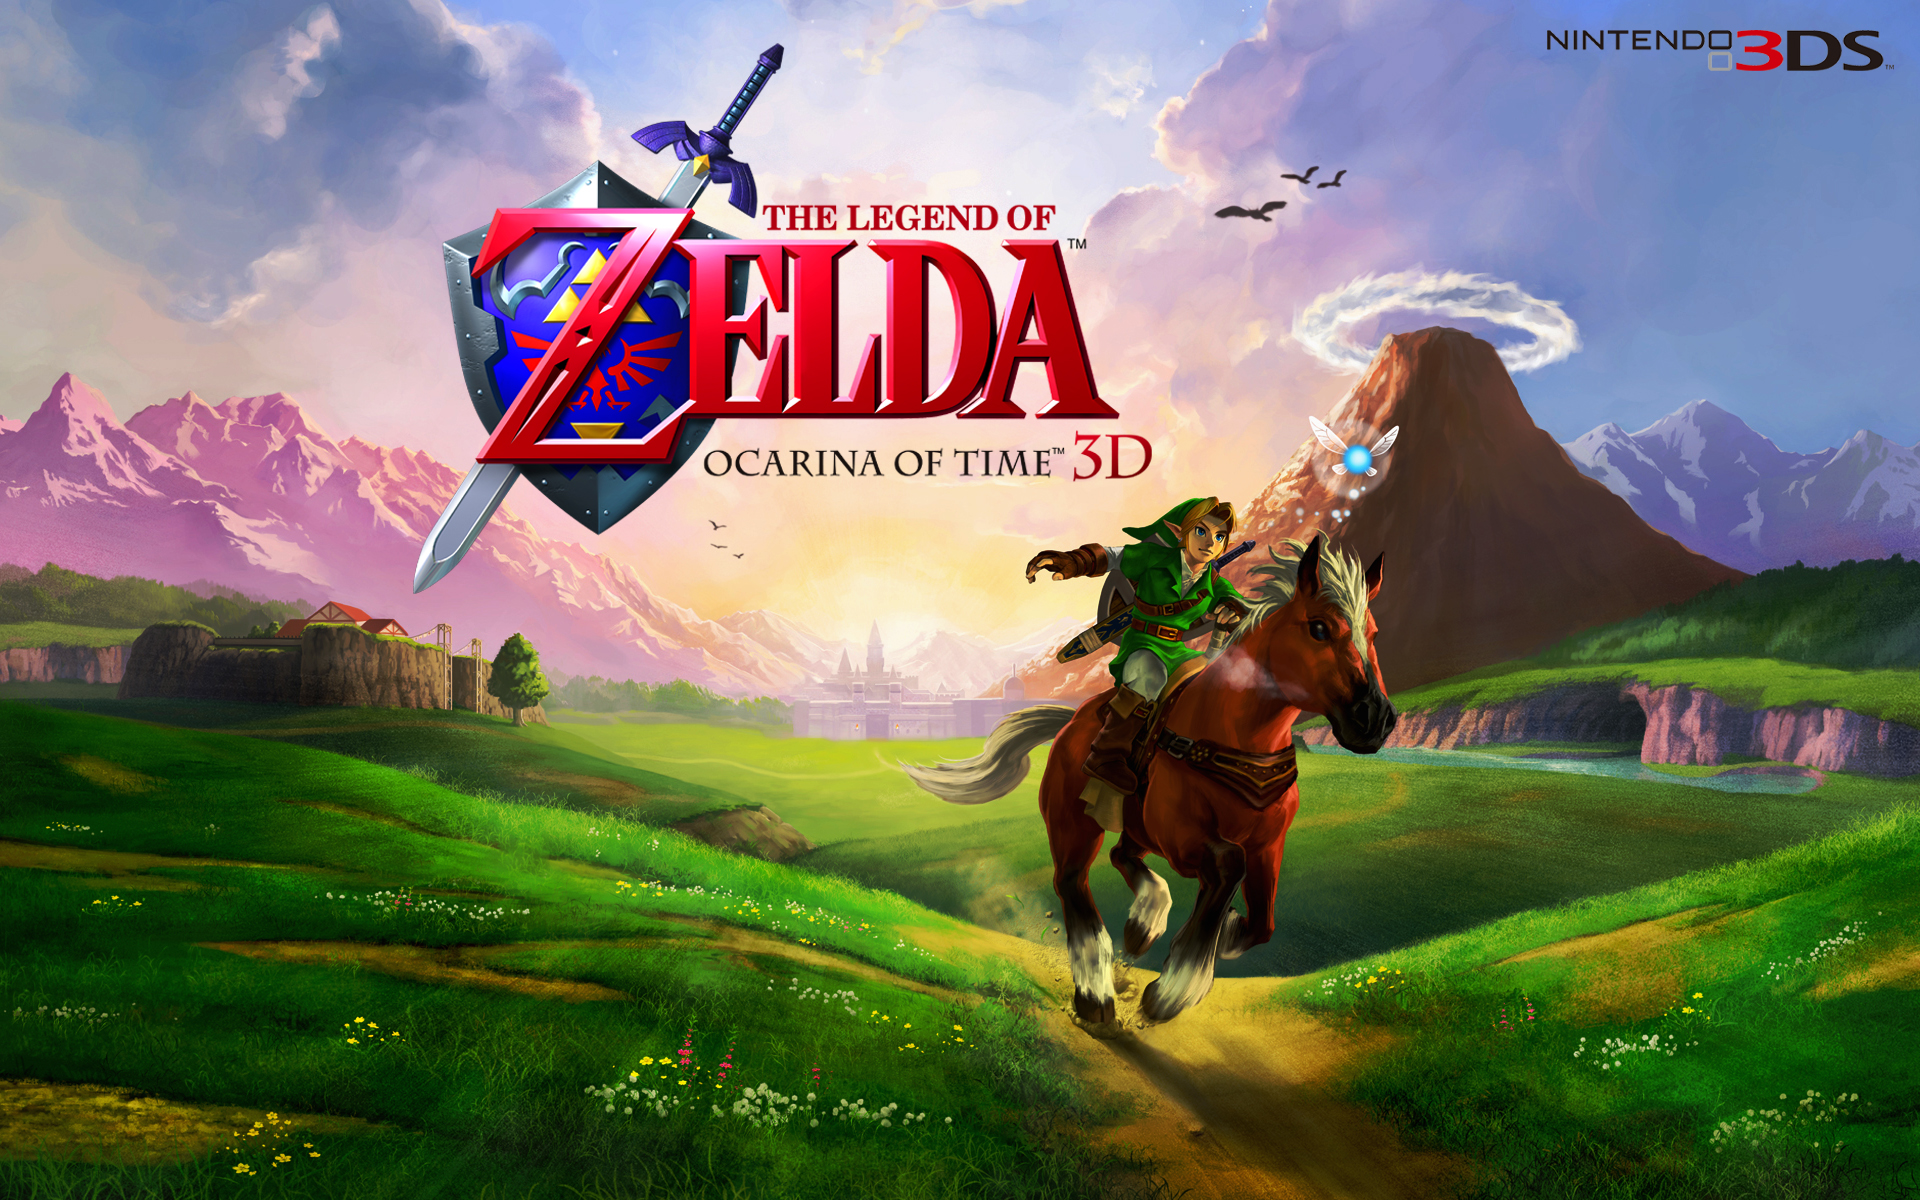 The Legend of Zelda Ocarina of Time 3D wallpaper   ForWallpapercom 1920x1200